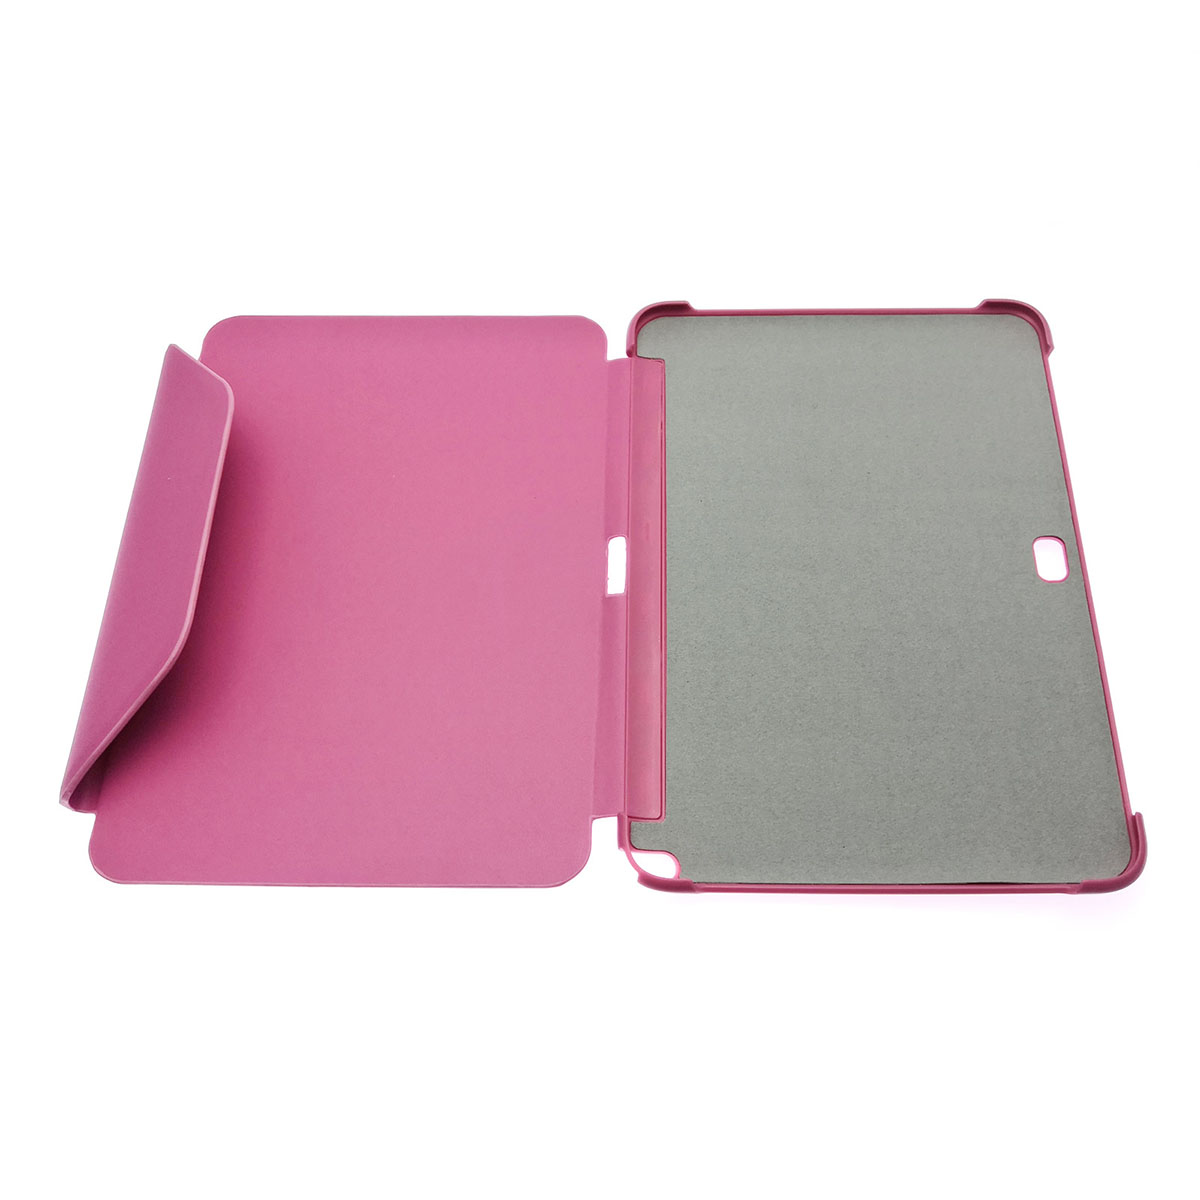 Чехол книжка для SAMSUNG Galaxy Note 10.1 (SM-N8000), силикон, пластик, цвет розовый.